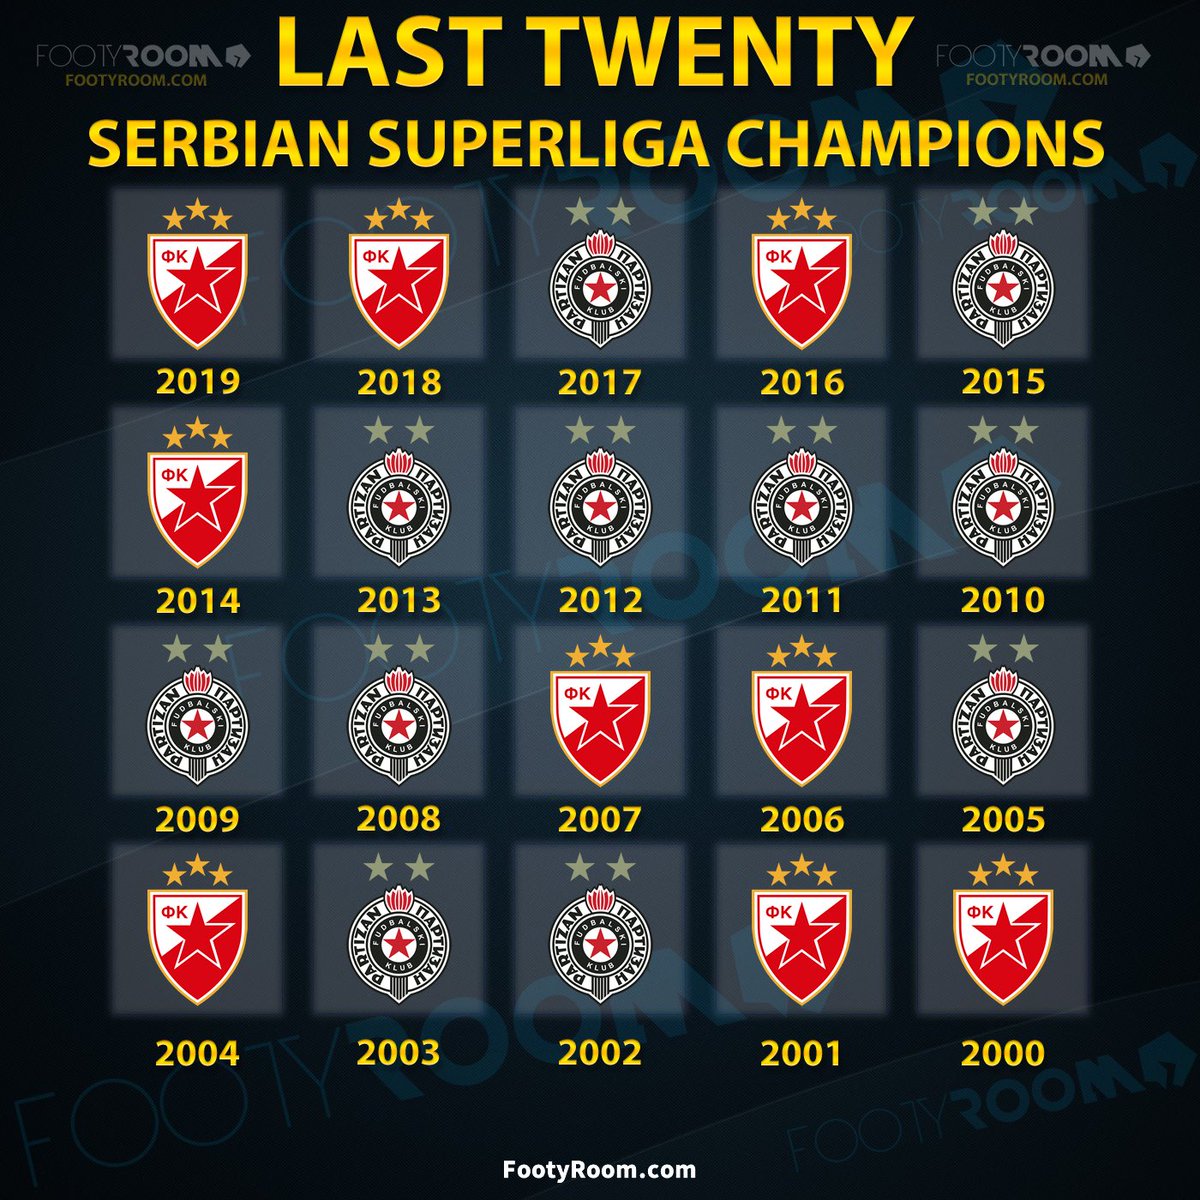 Serbian Football on Twitter: Finally the Superliga schedule has